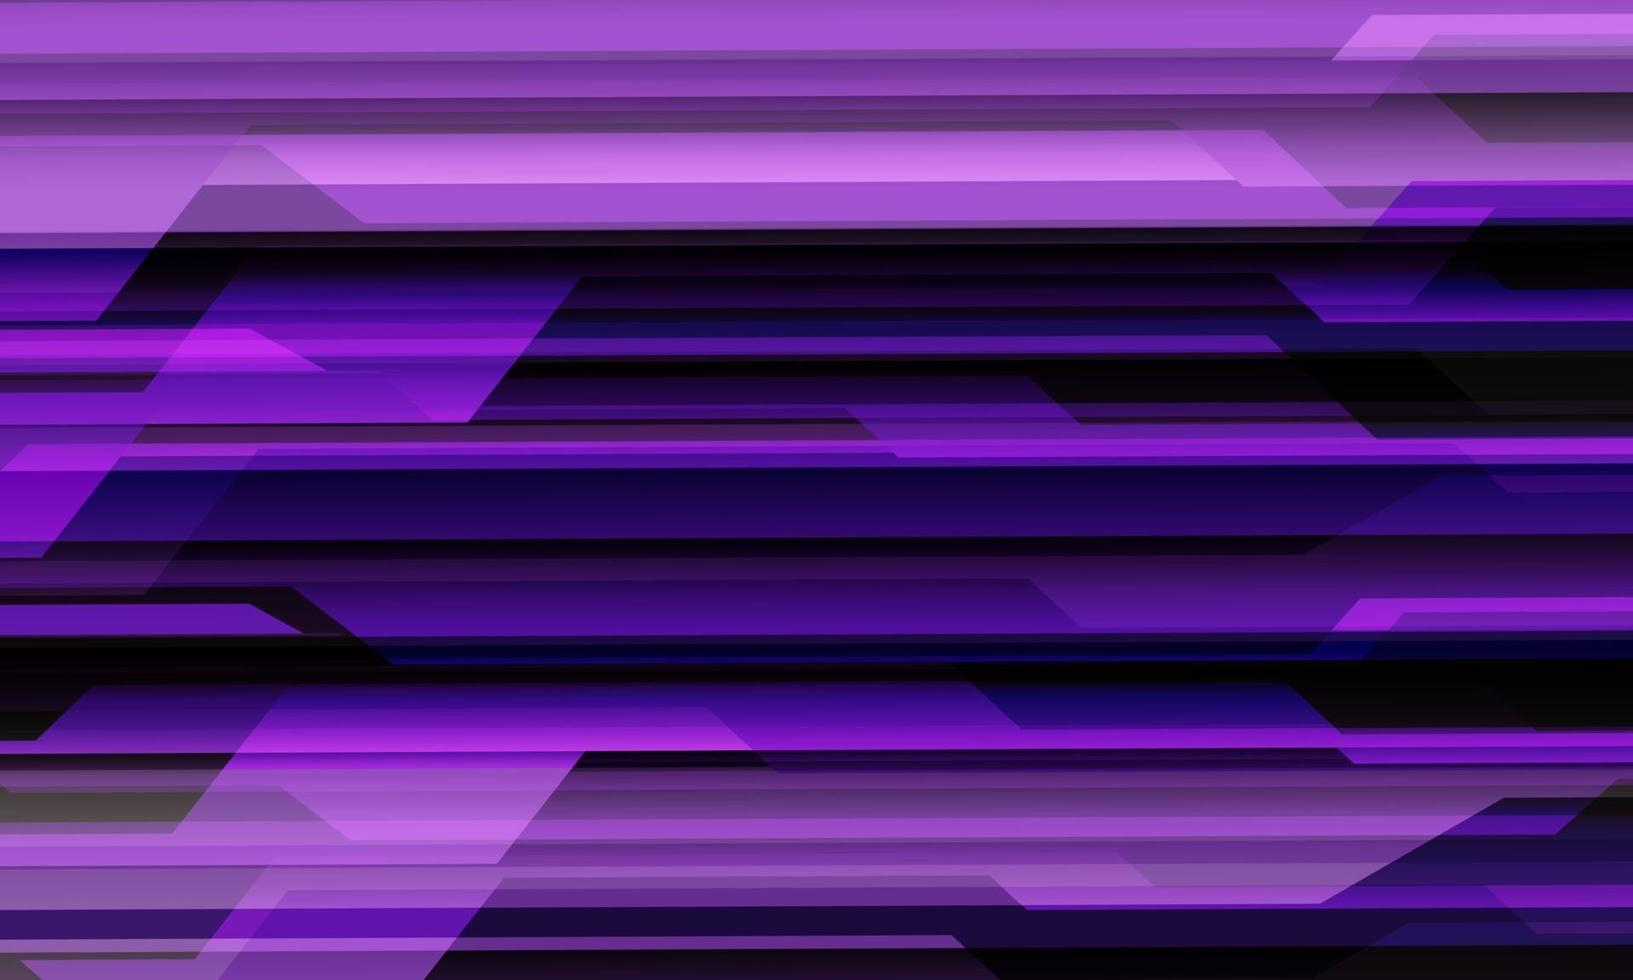 abstrakt violett svart cyber krets geometrisk mönster design modern teknik futuristisk bakgrund vektorillustration. vektor